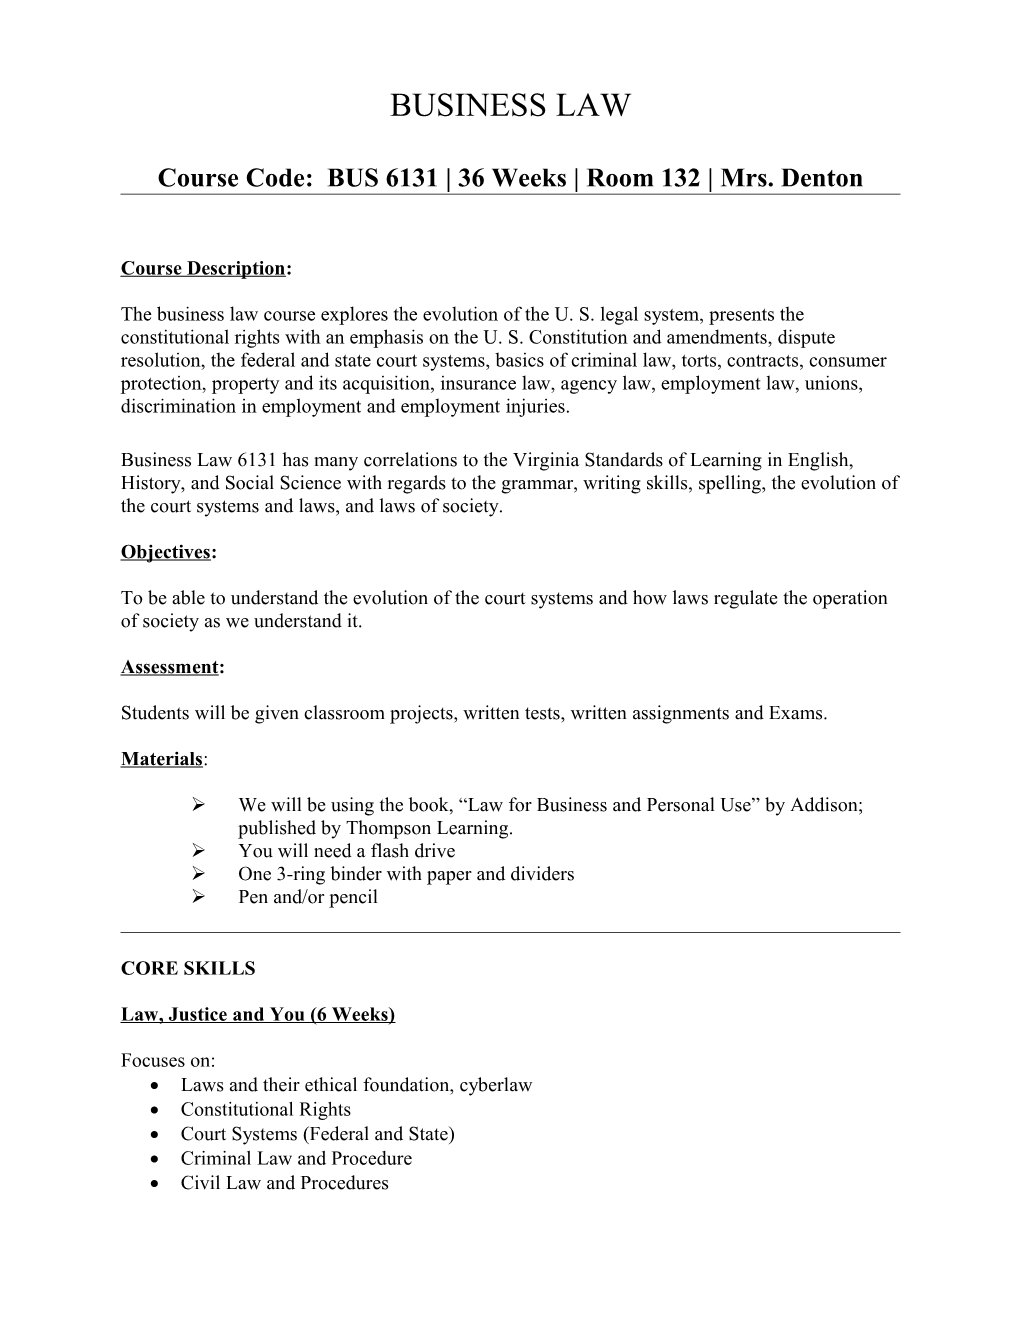 Course Code: BUS 6131 36 Weeks Room 132 Mrs. Denton